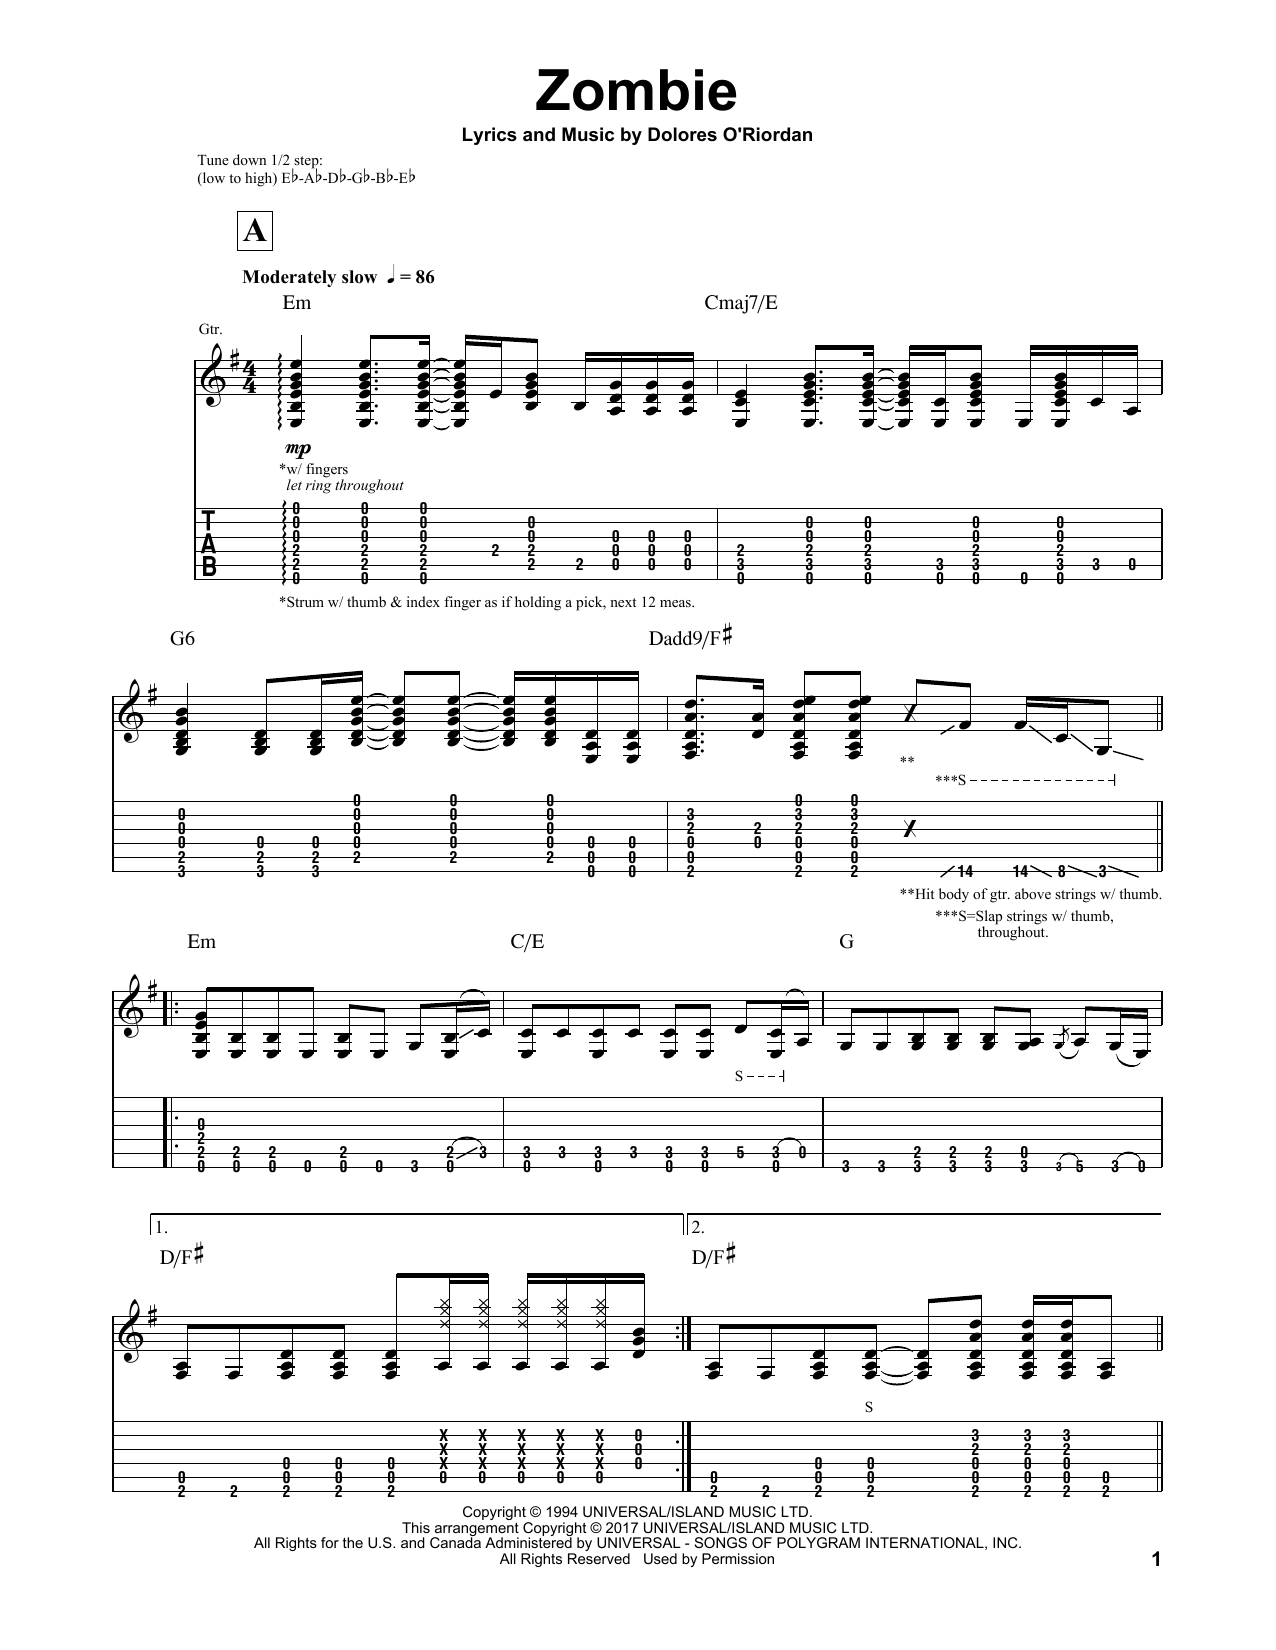 Igor Presnyakov Zombie Sheet Music Notes & Chords for Guitar Tab - Download or Print PDF